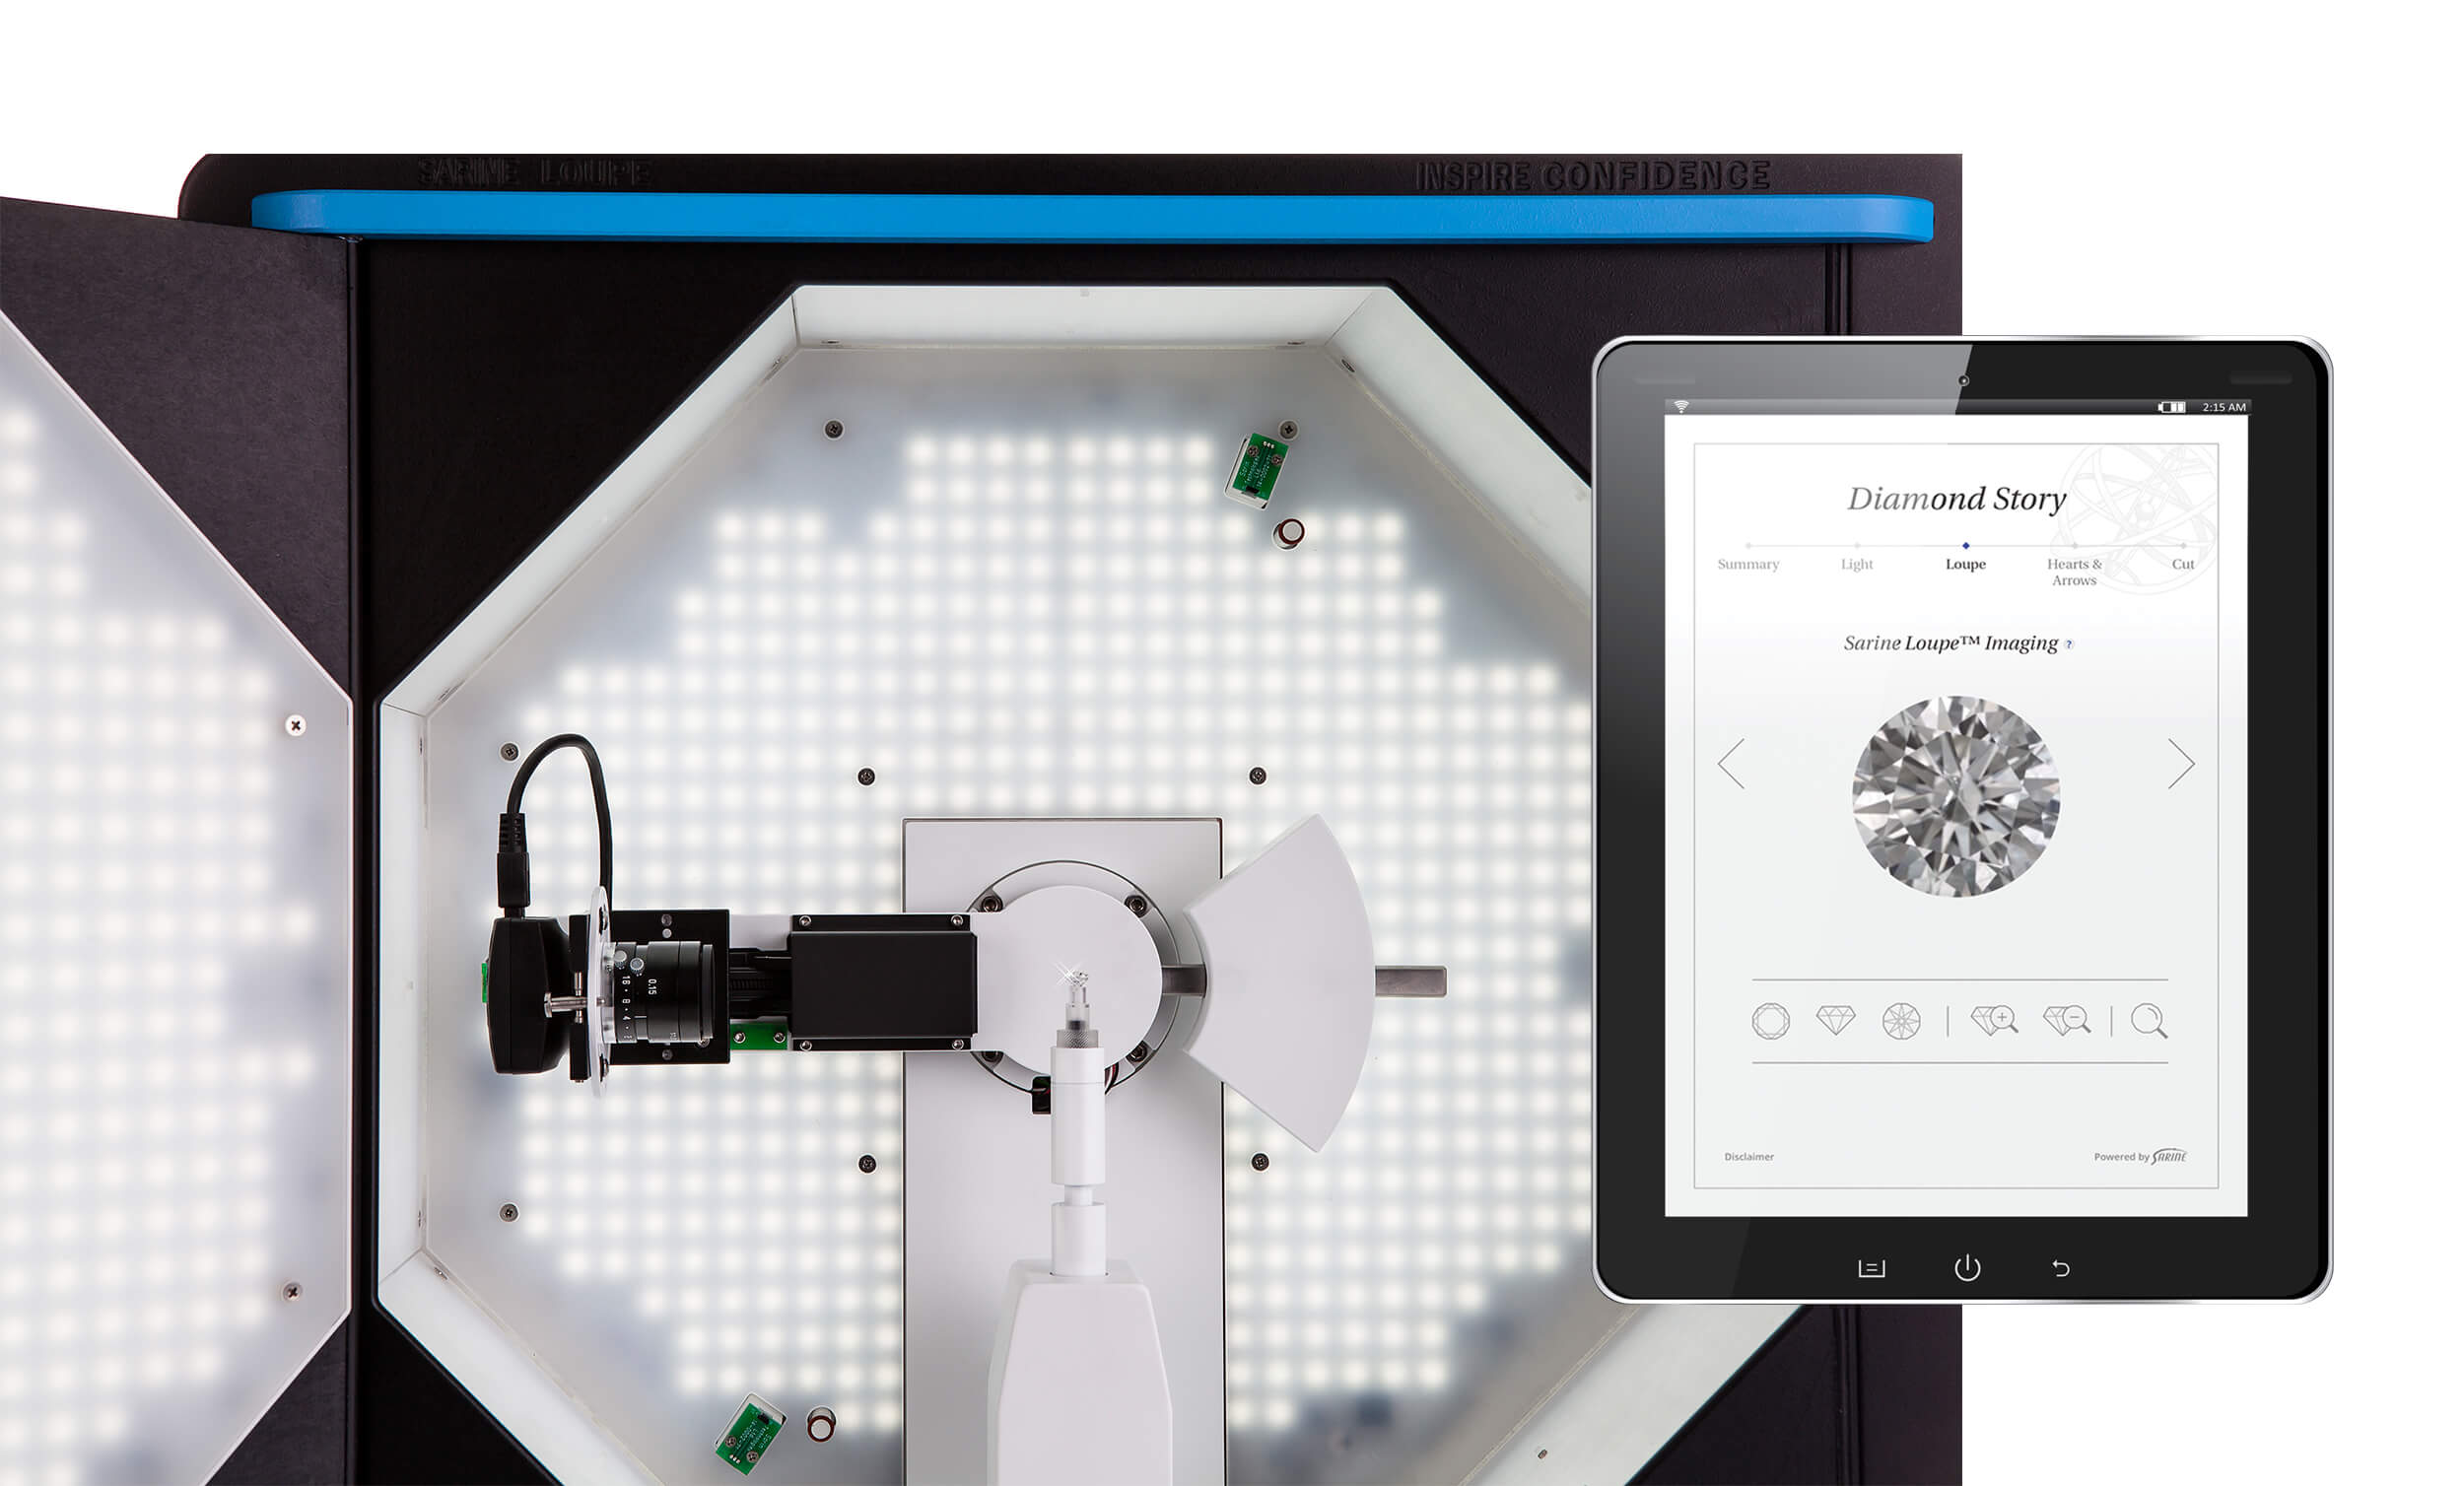 Sarine Loupe scanning technology, with digital diamond imaging display on an iPad